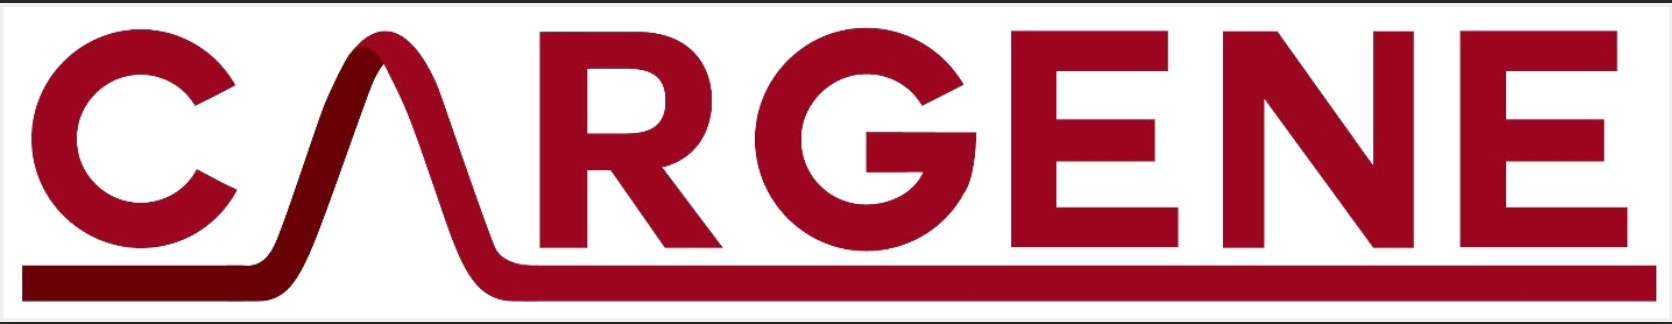 Cargene logo